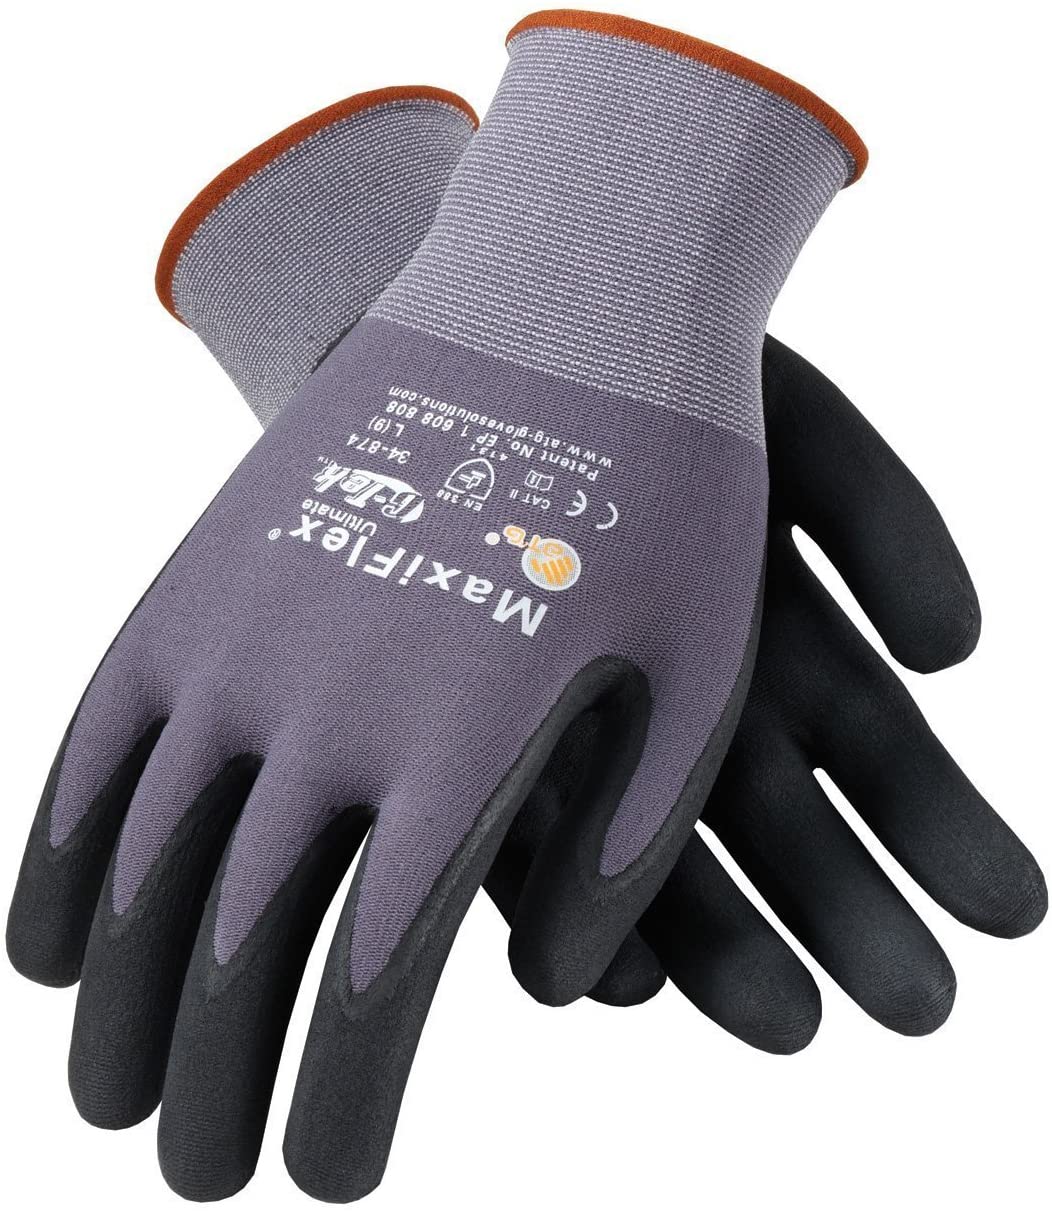 Maxiflex 34-874 Ultimate Nitrile Grip Work Gloves